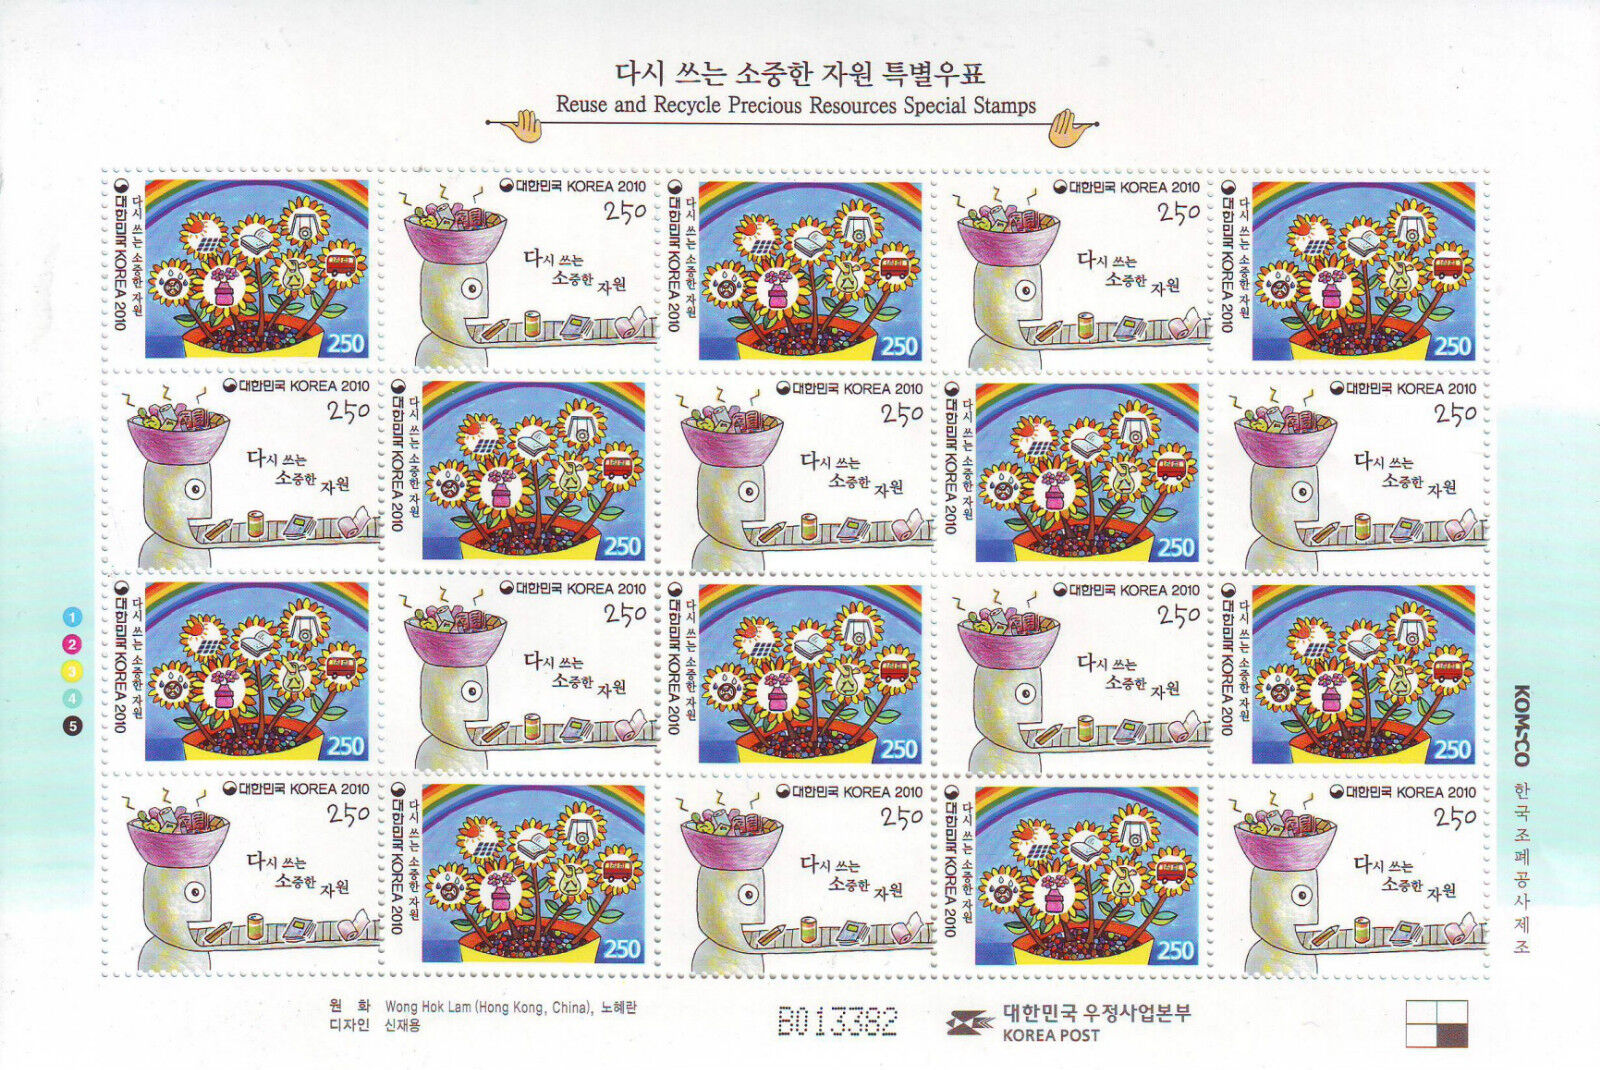 Korea - SC 2344 Reuse and Recycle Precious Resources sheet 2010